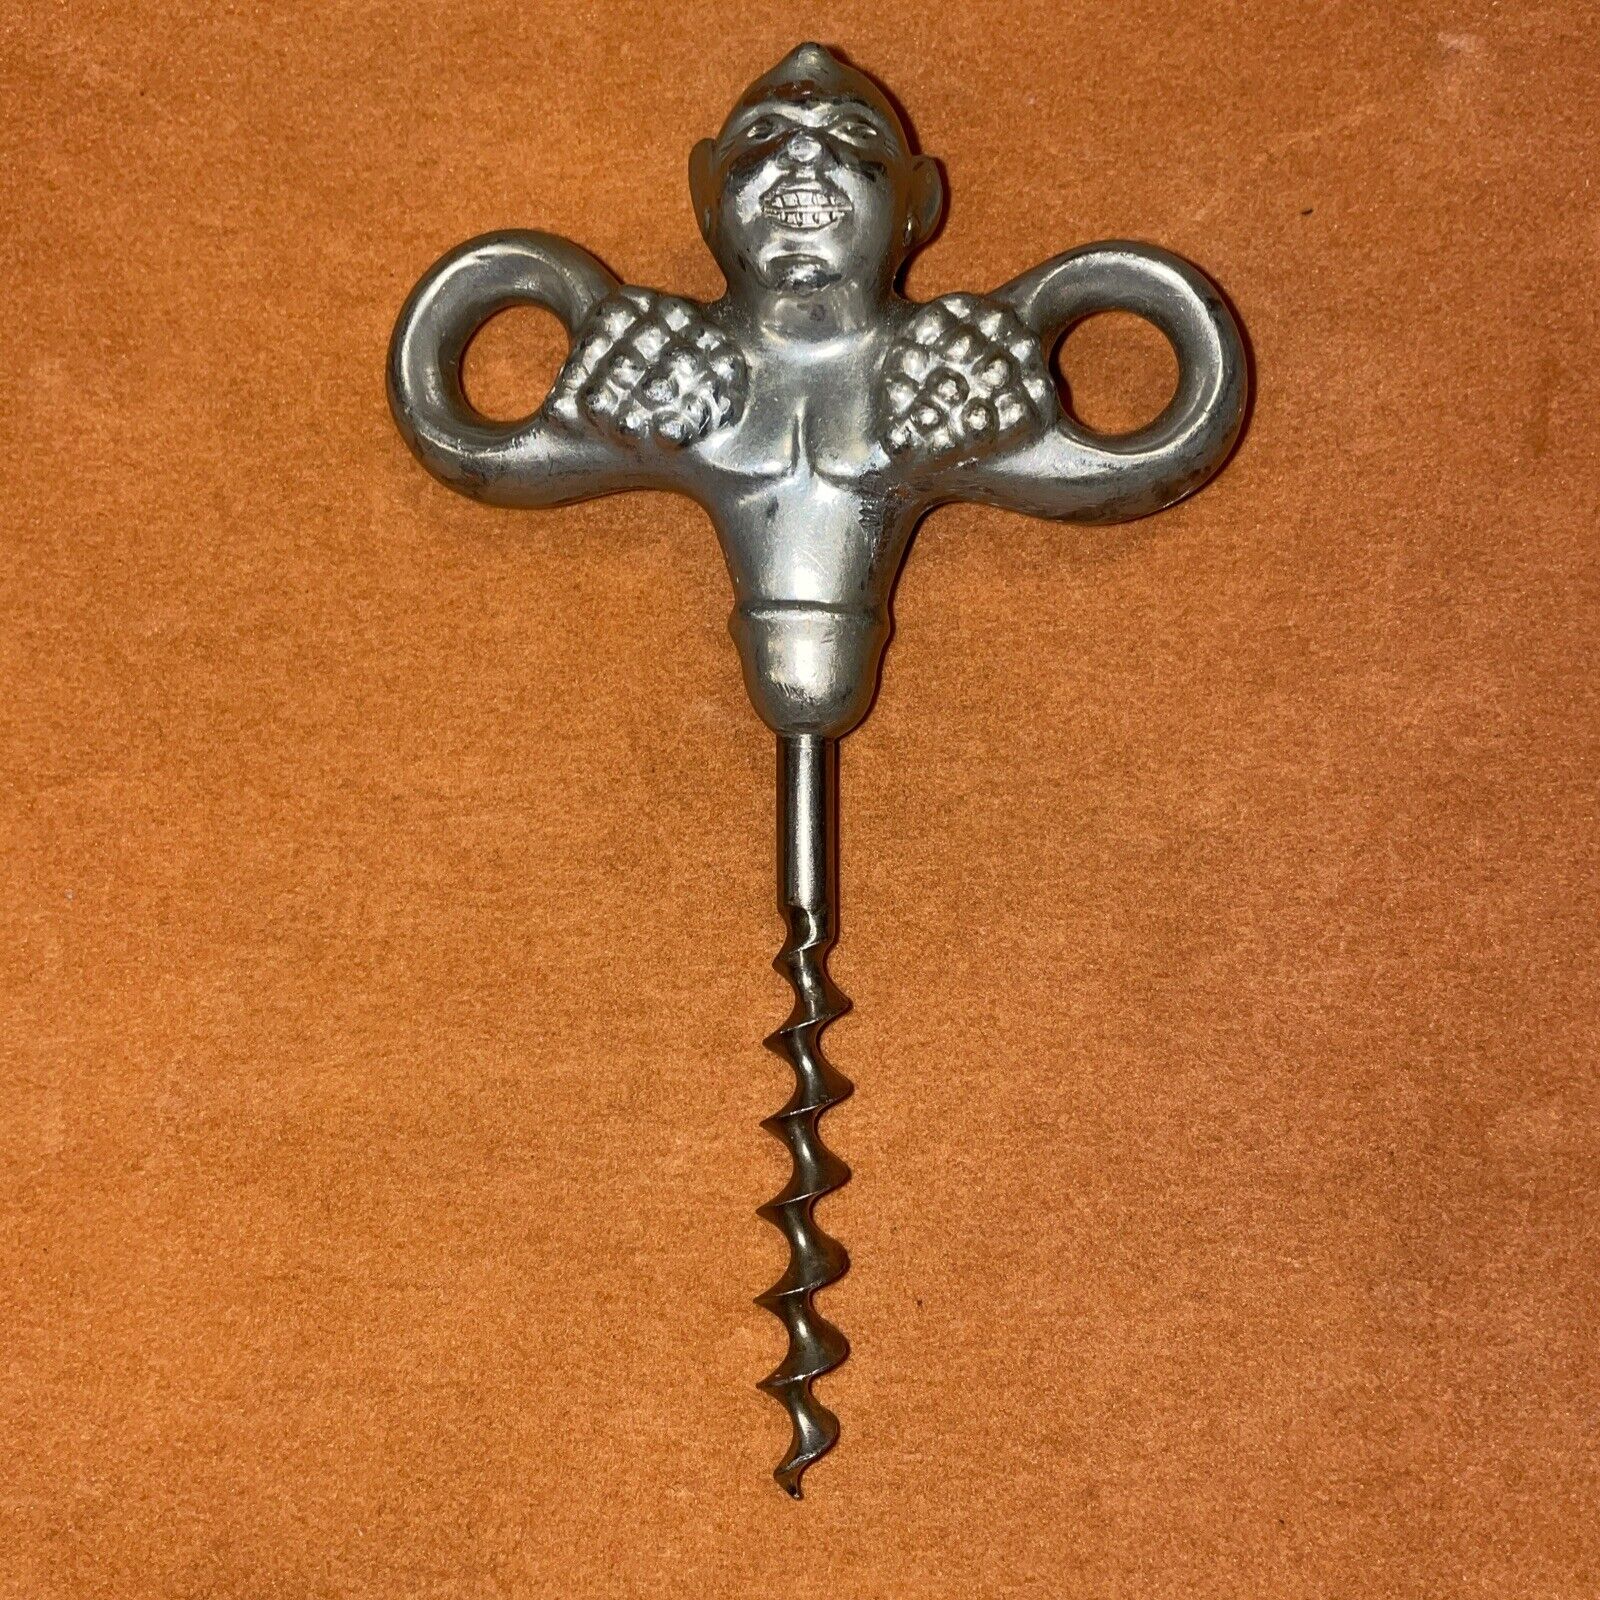 Vintage Danish pewter corkscrew designed by Just Andersen (1884-1943).